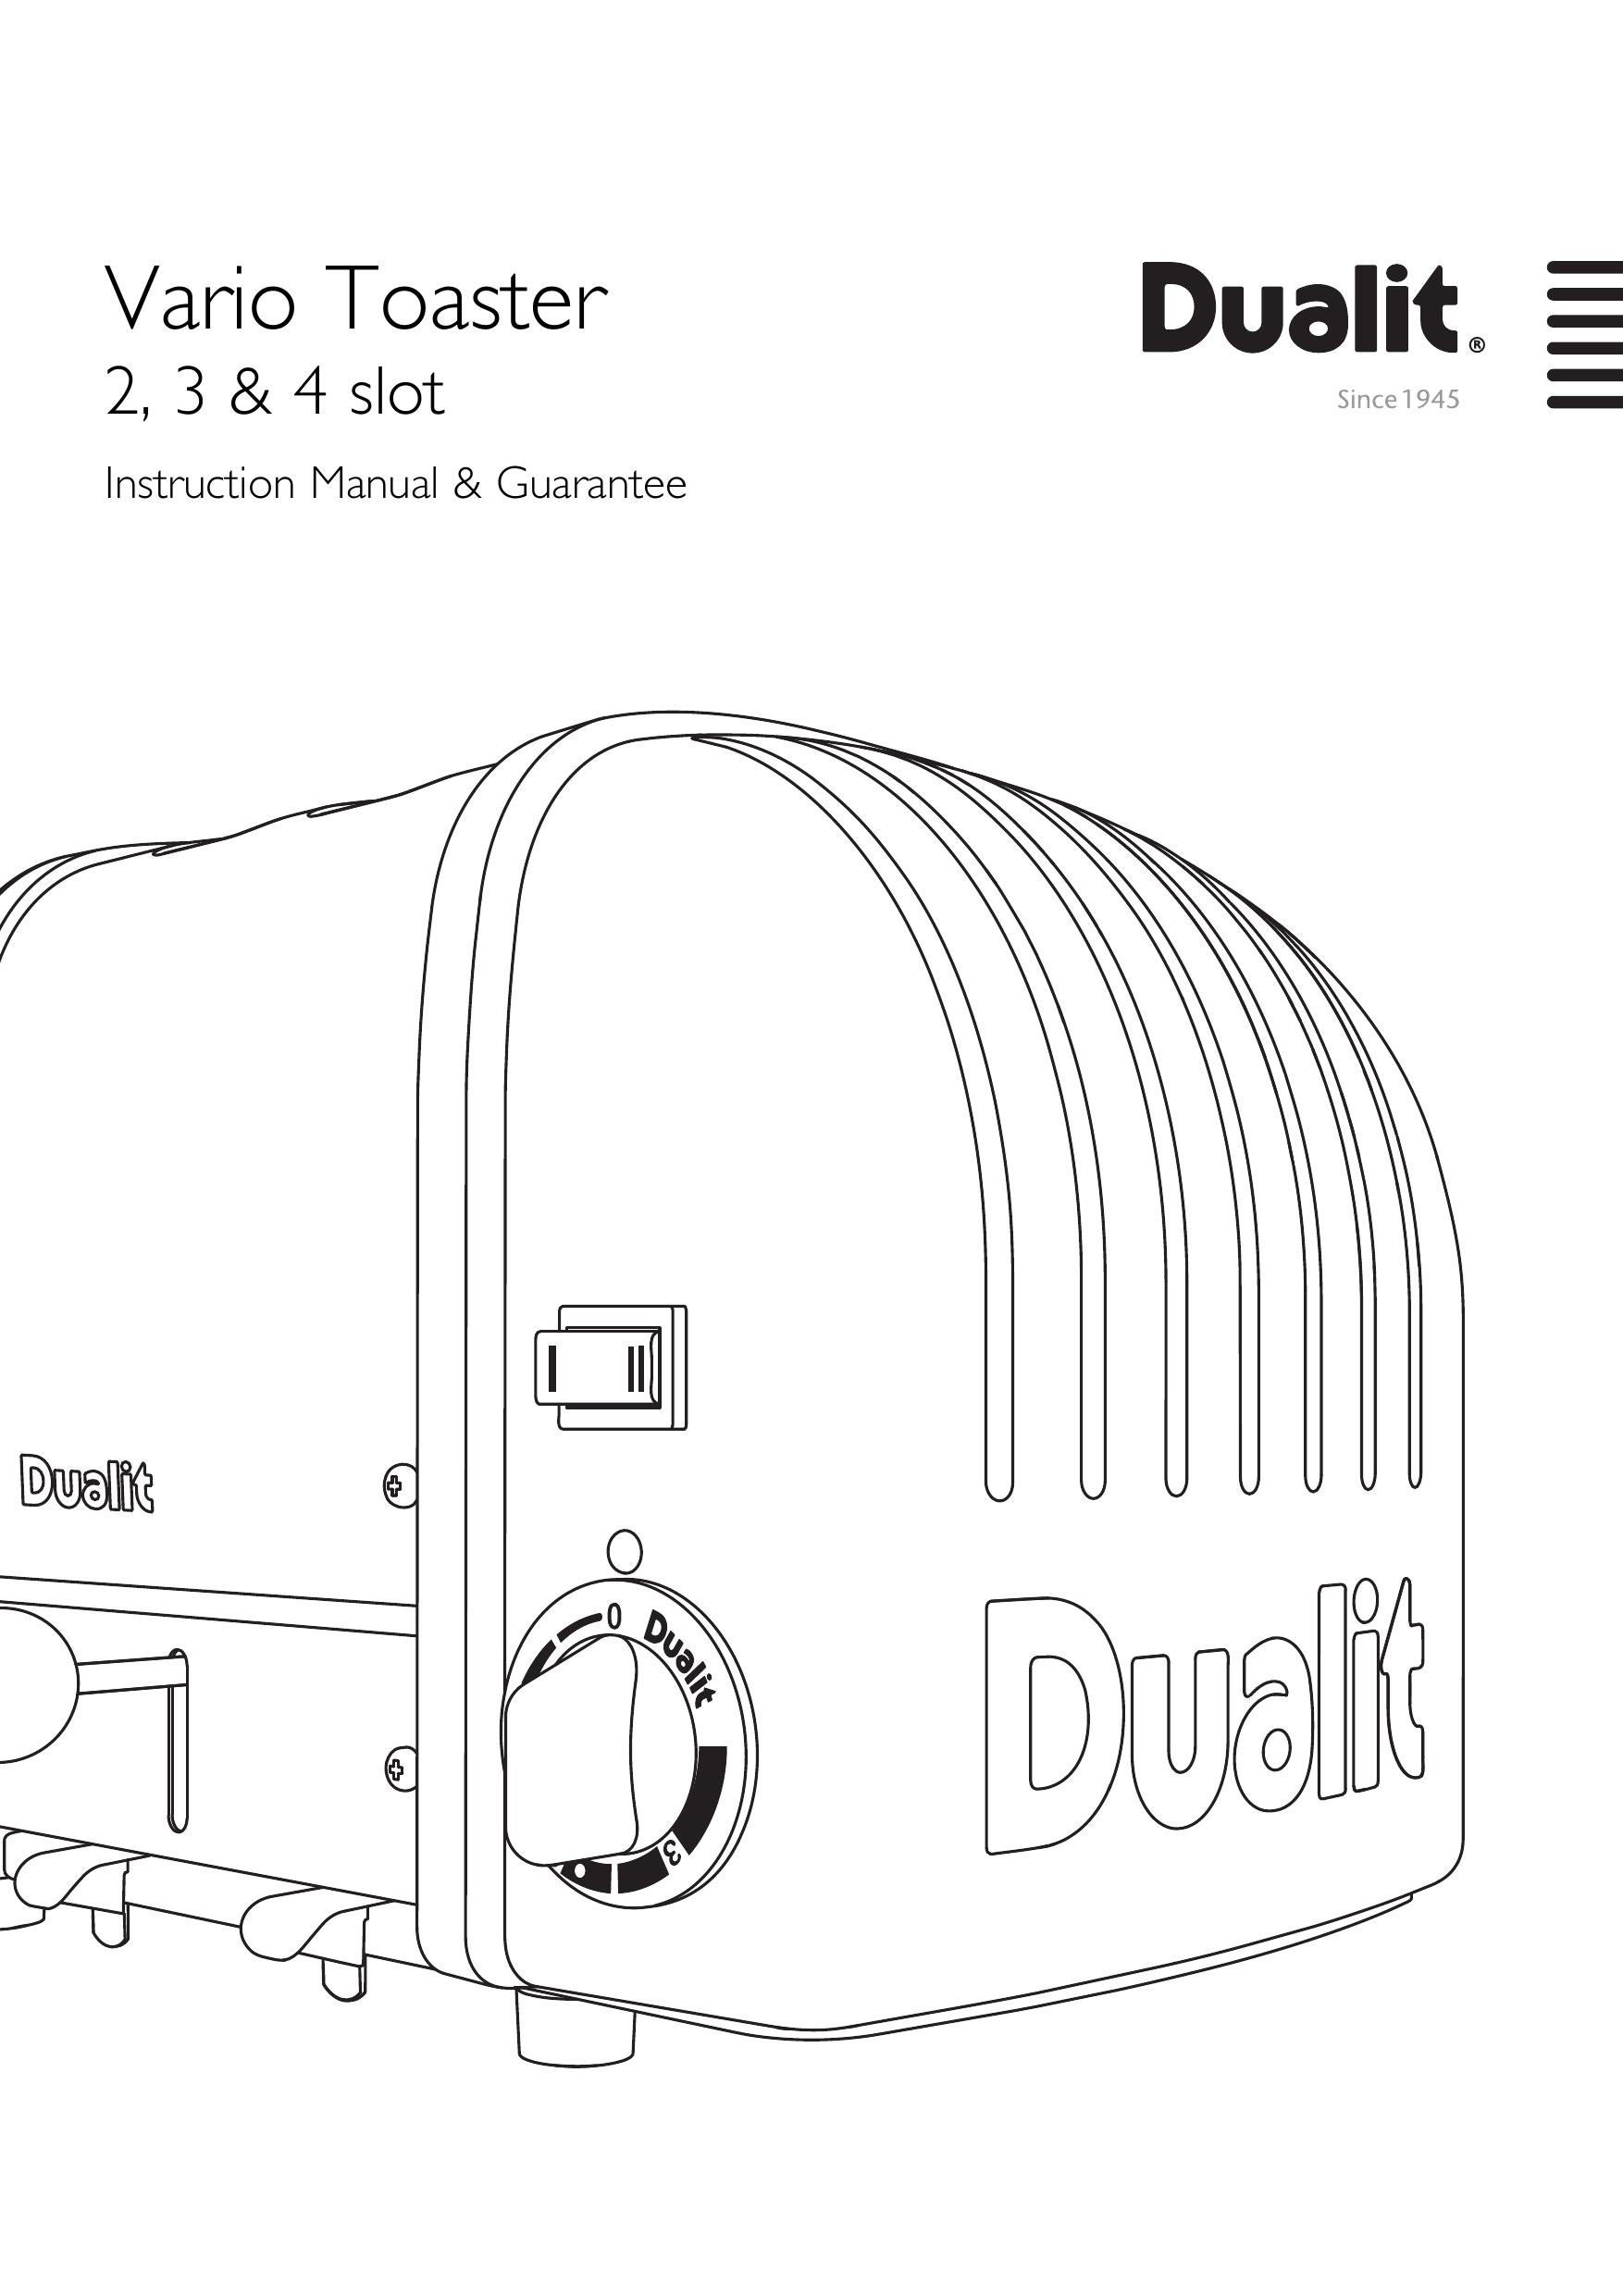 Dualit 27168 Toaster User Manual